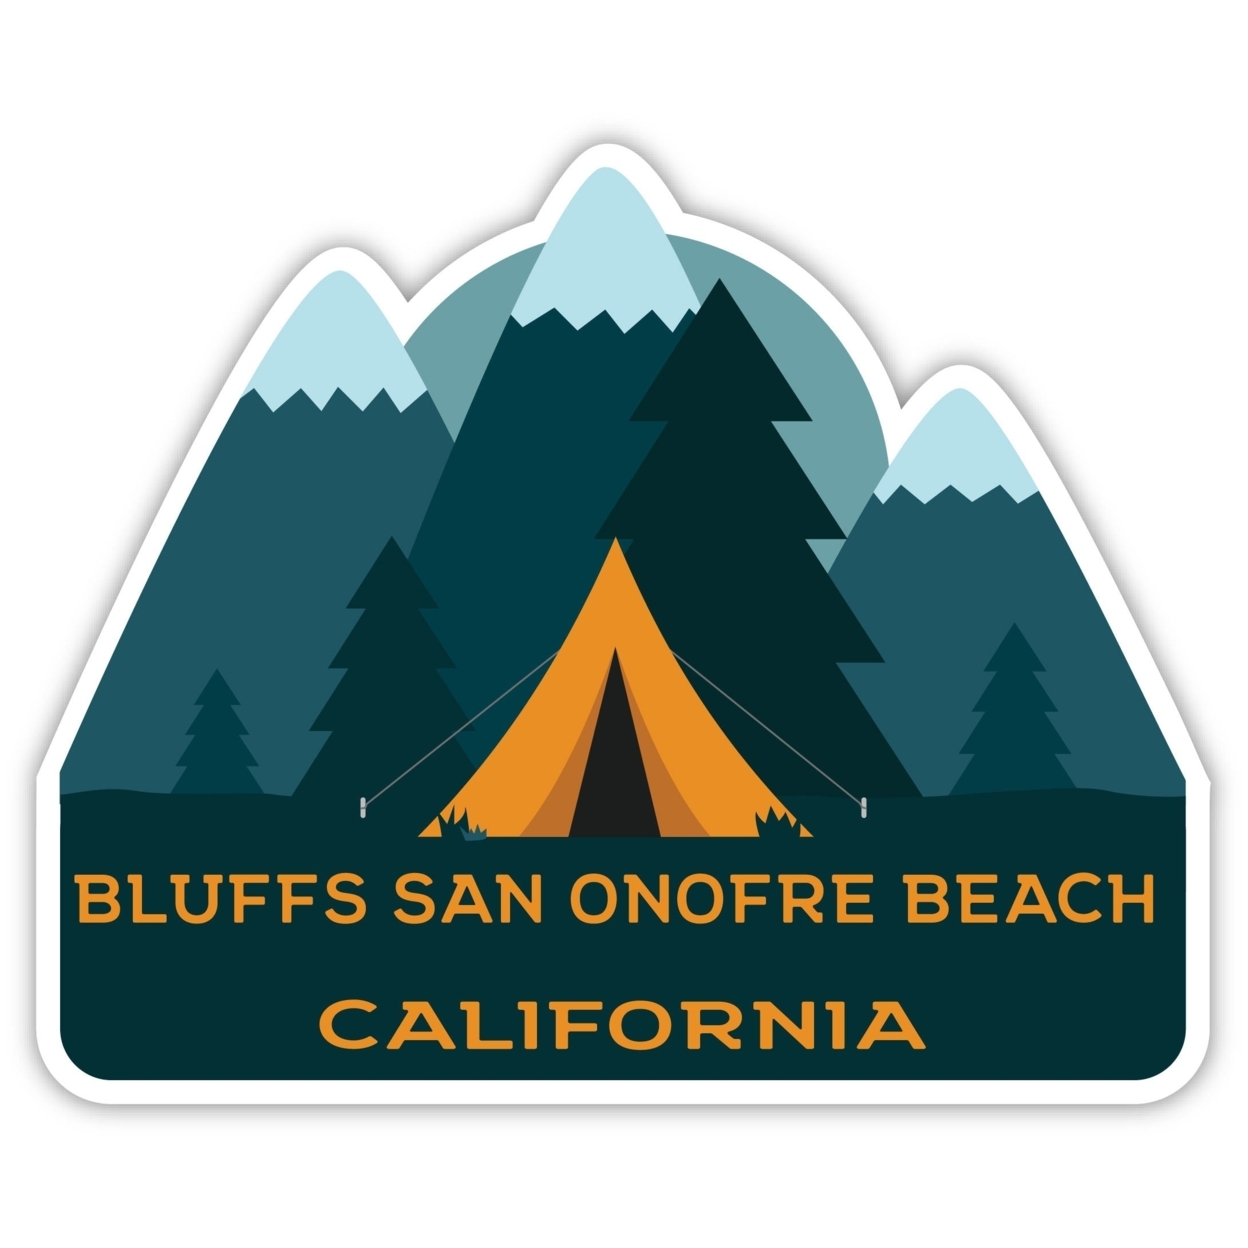 Bluffs San Onofre Beach California Souvenir Decorative Stickers (Choose Theme And Size) - Single Unit, 10-Inch, Adventures Awaits